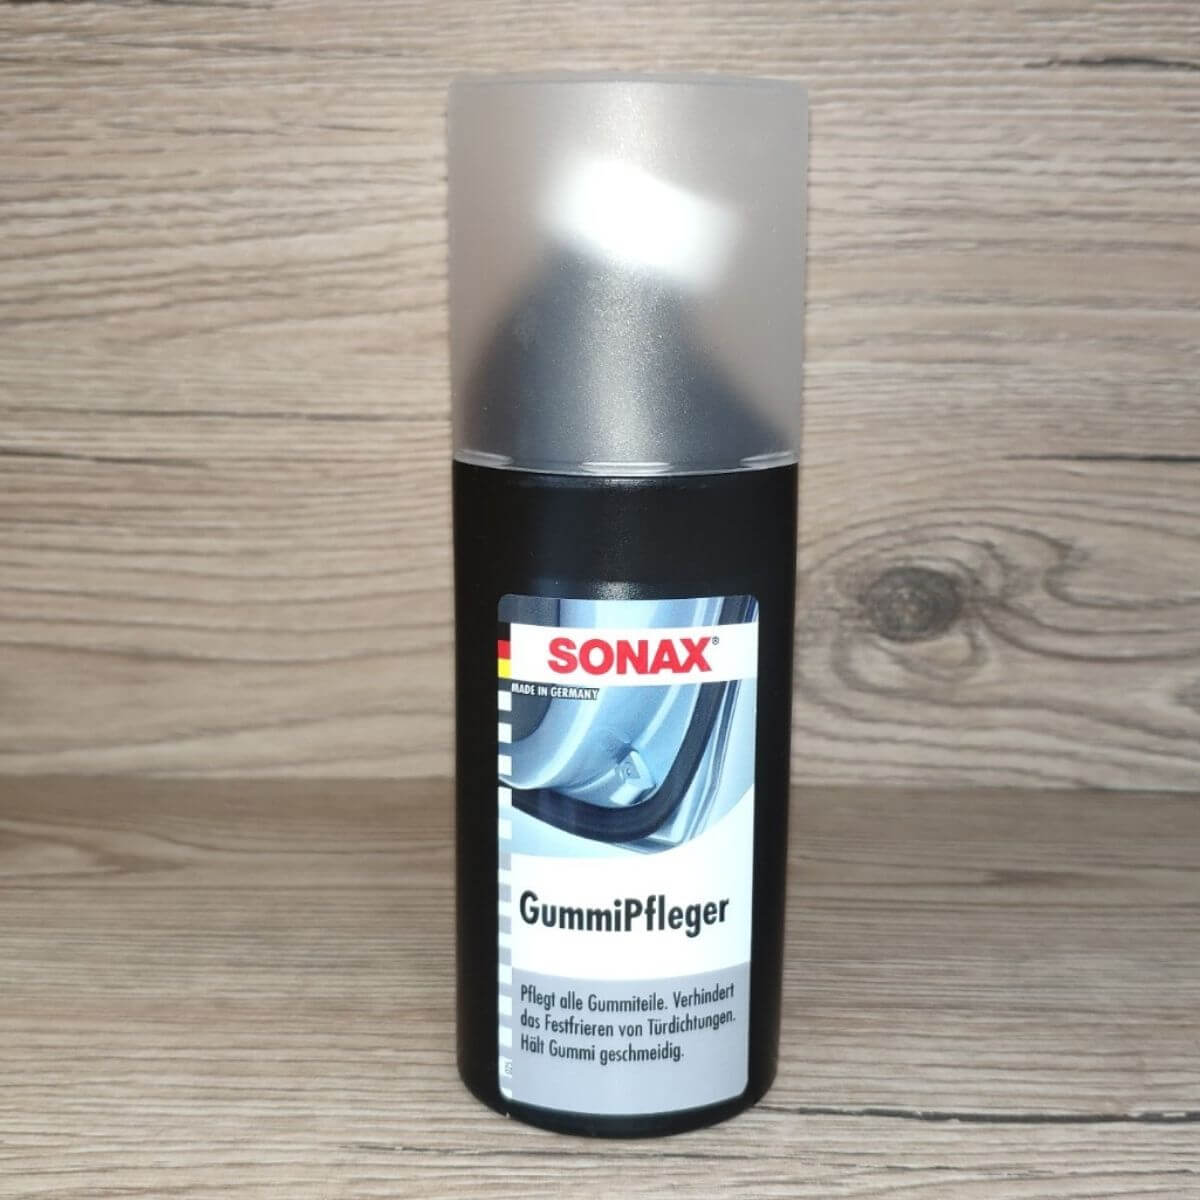 SONAX Rubber Protectant (GummiPflege) - 100ml Bottle